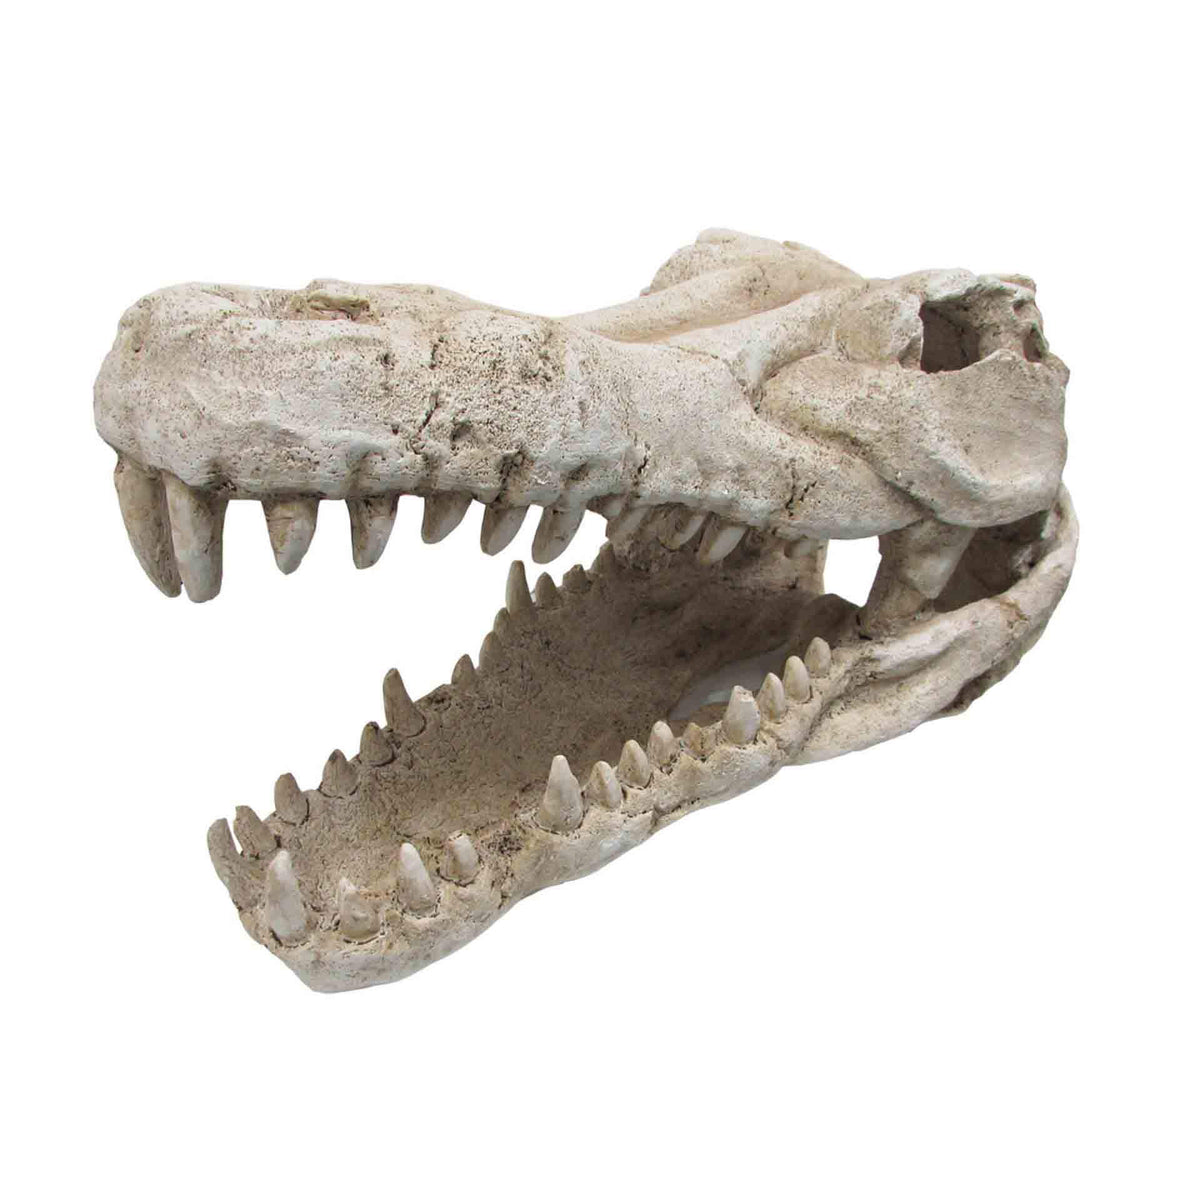 Croc Skull X Large - 44 x 22 x 25cm